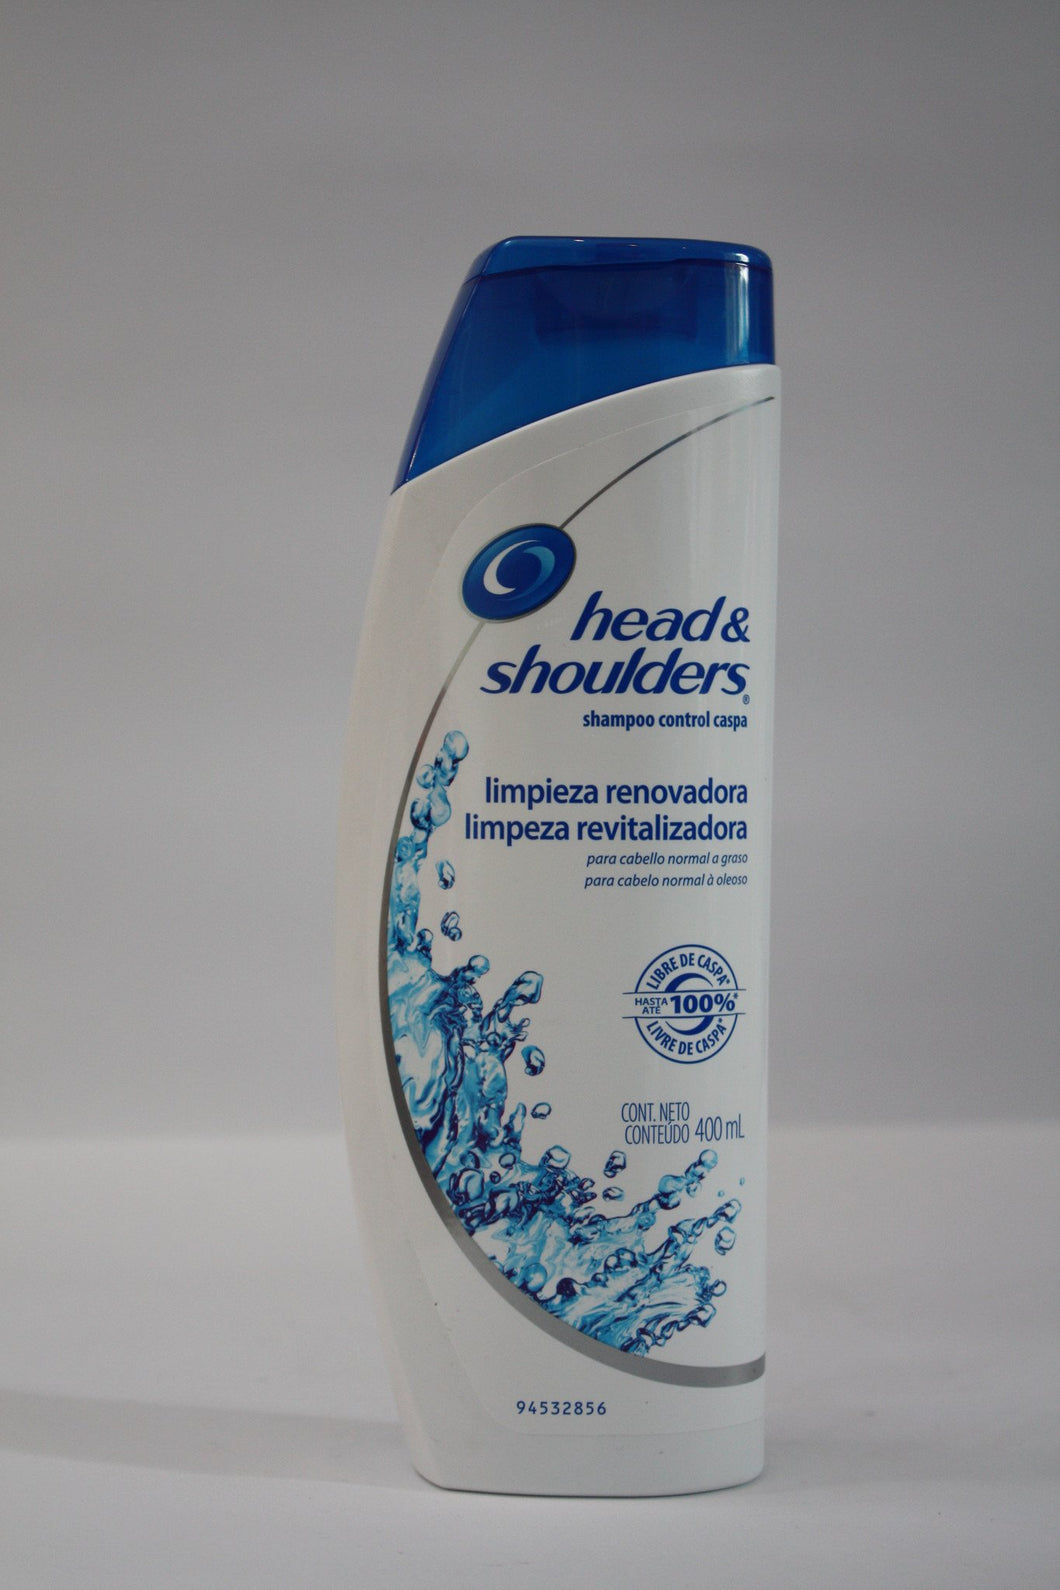 Caja Shampoo Head & Shoulders Limpieza Renovadora de 400 ml con 12 piezas - Procter & Gamble-Shampoo-Procter & Gamble-7501001133276C-MayoreoTotal